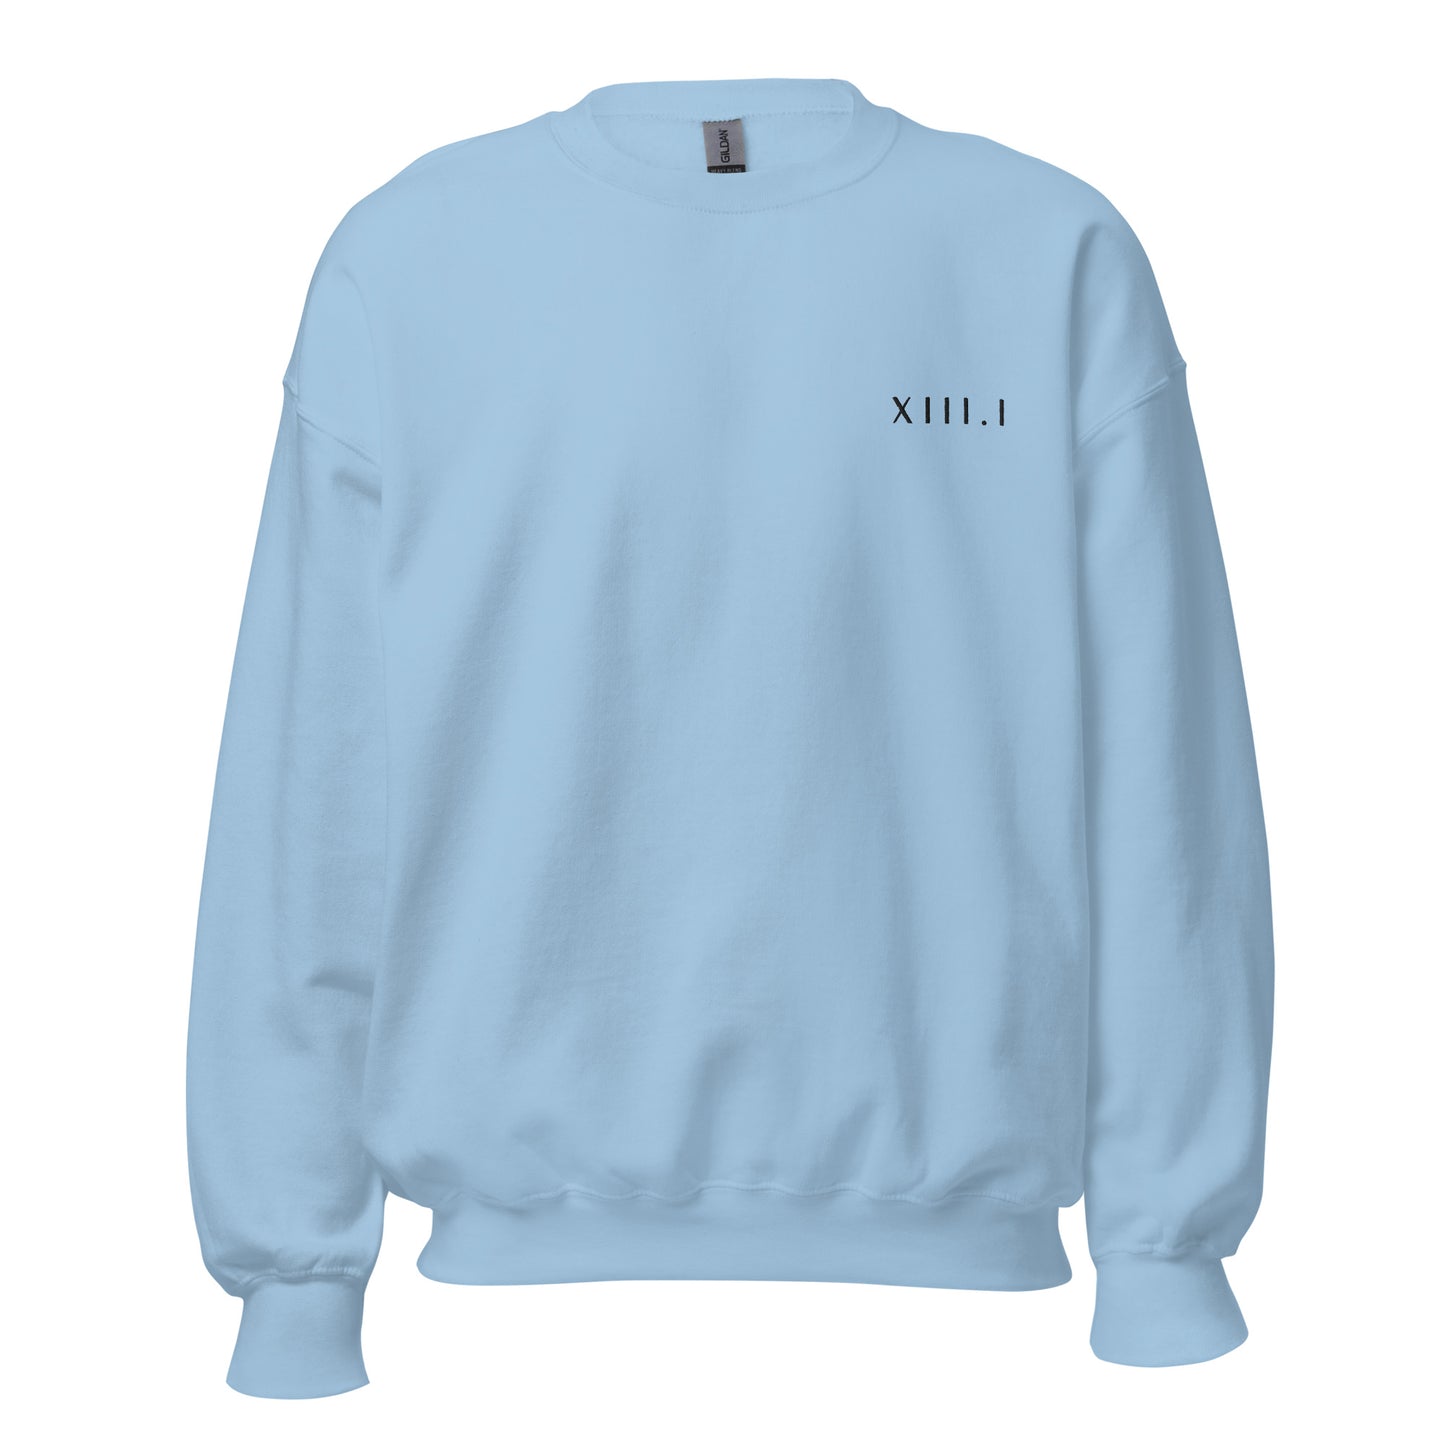 light blue unisex sweatshirt with XIII.I 13.1 half marathon in roman numerals embroidered in black writing